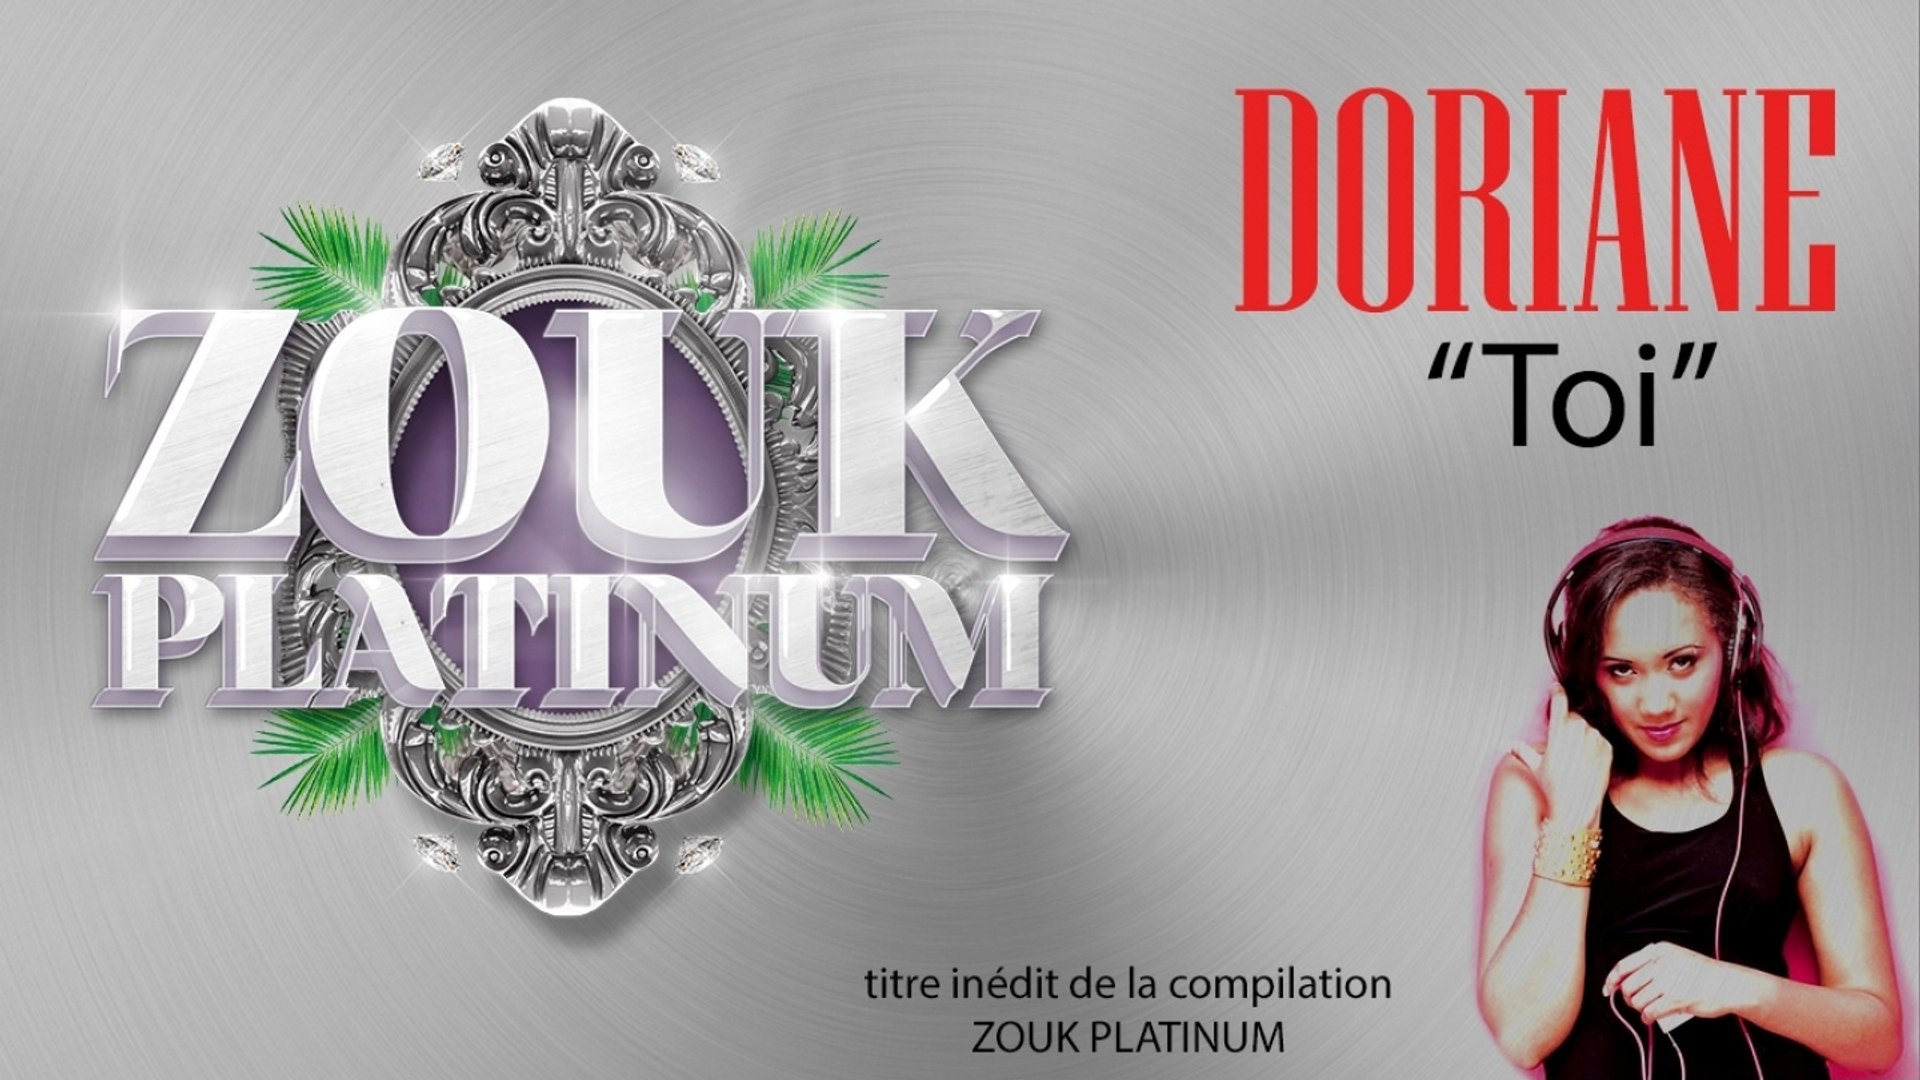 Doriane - toi - [ZOUK PLATINUM] - Vidéo Dailymotion